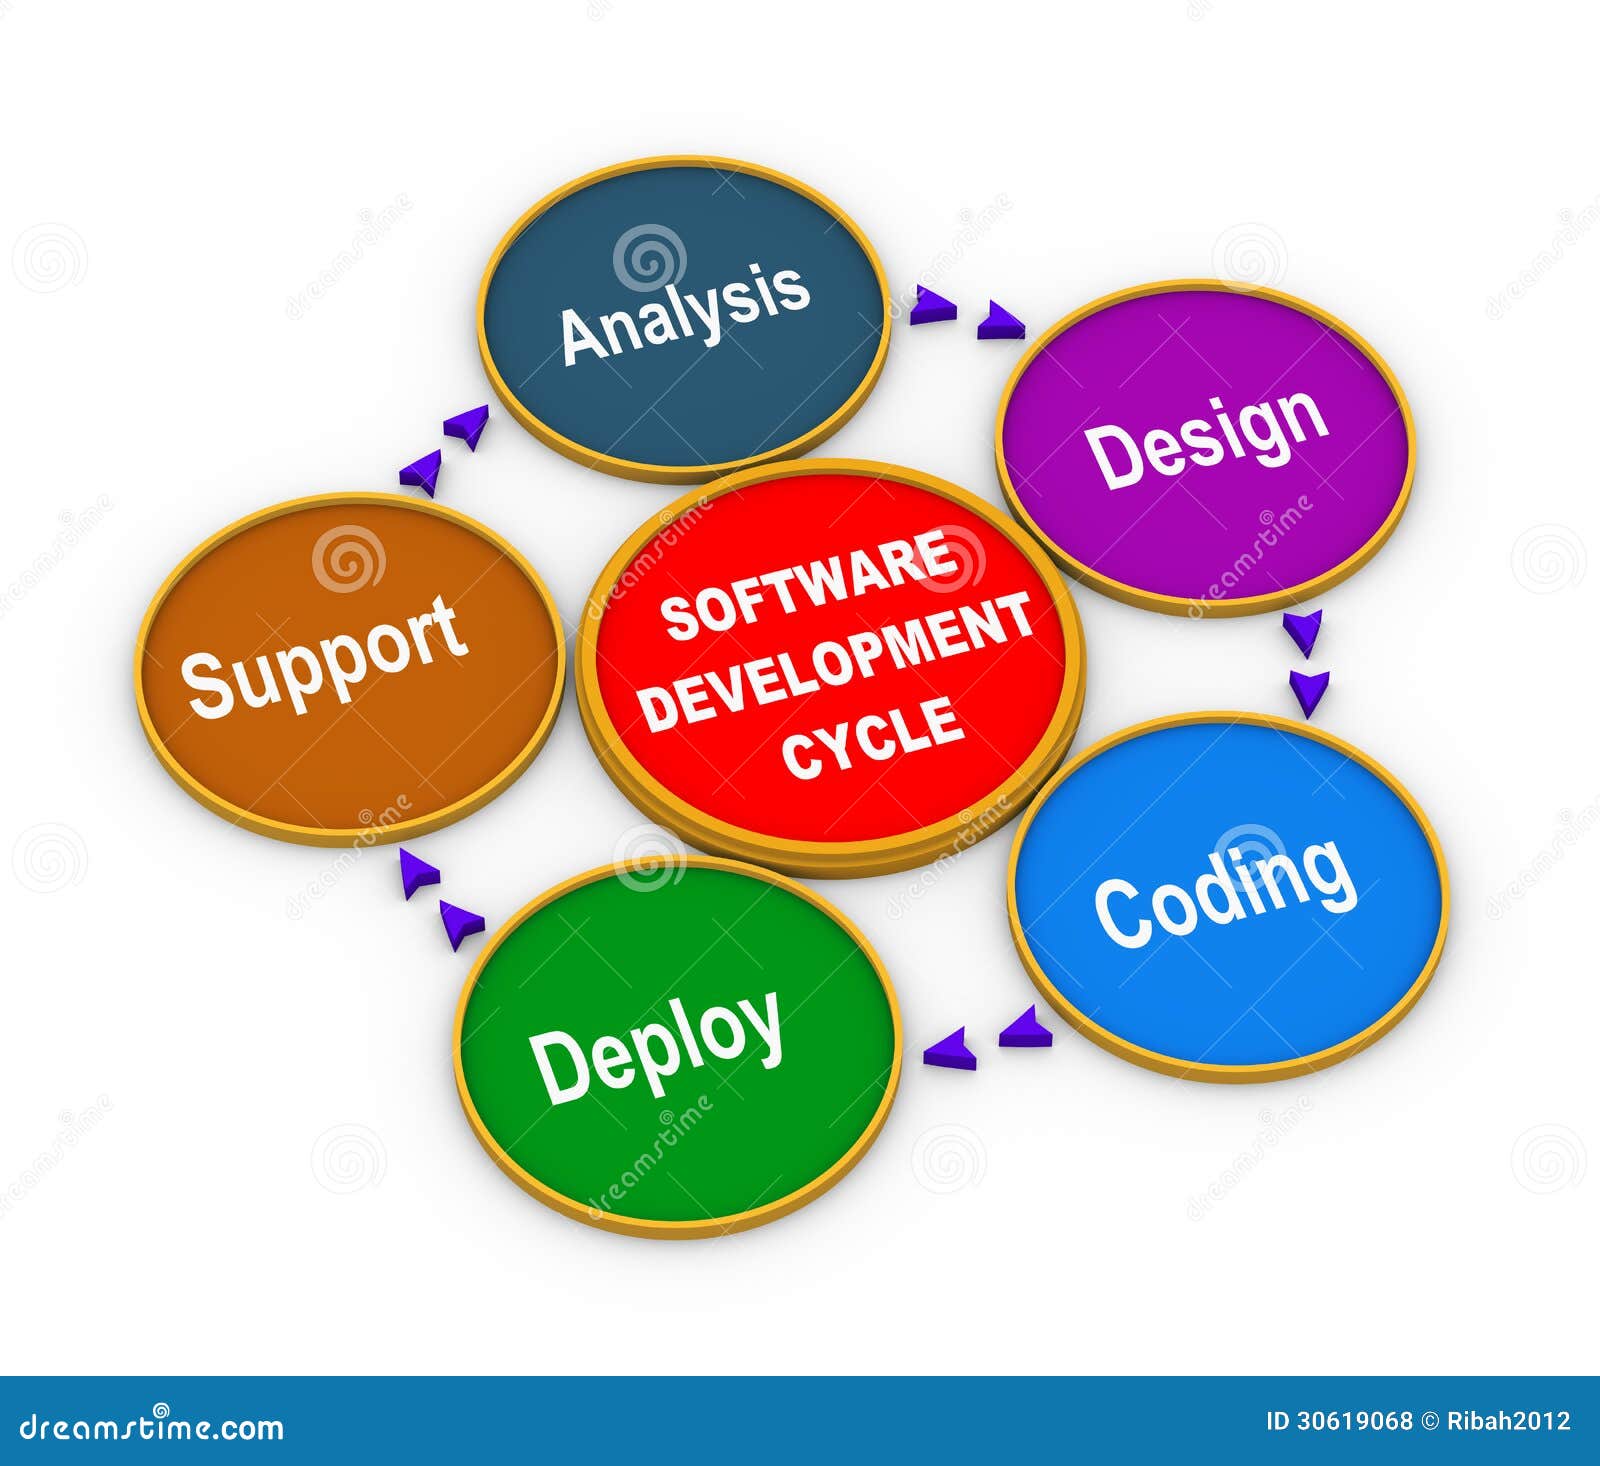 3d Proces Van Software-ontwikkeling Stock Illustratie - Illustration of ...